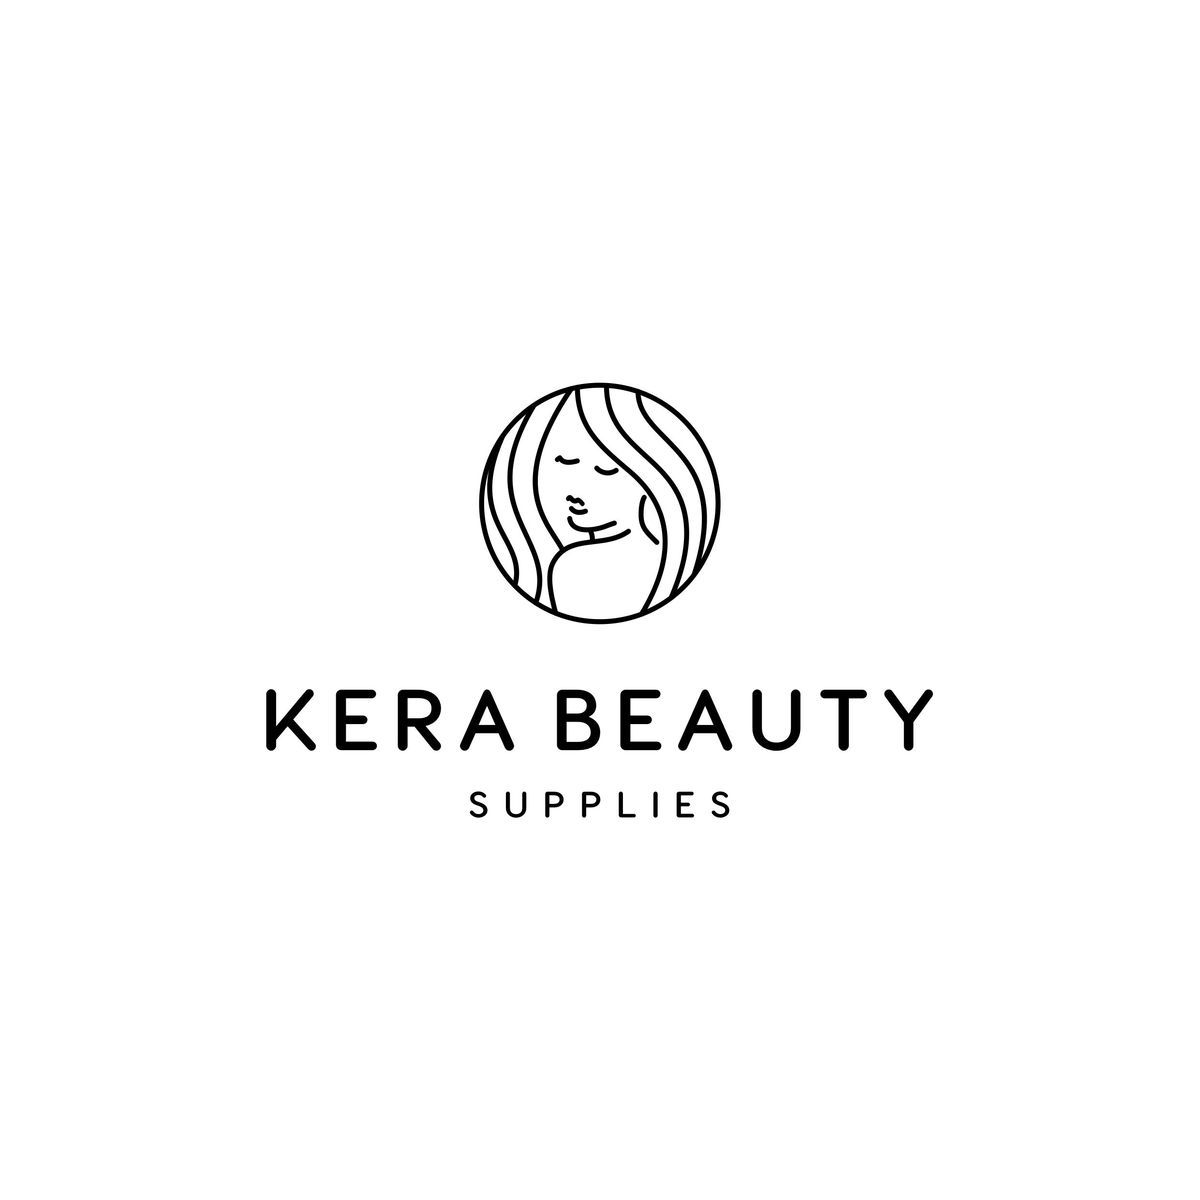 Kera Beauty by Rolake on Dribbble